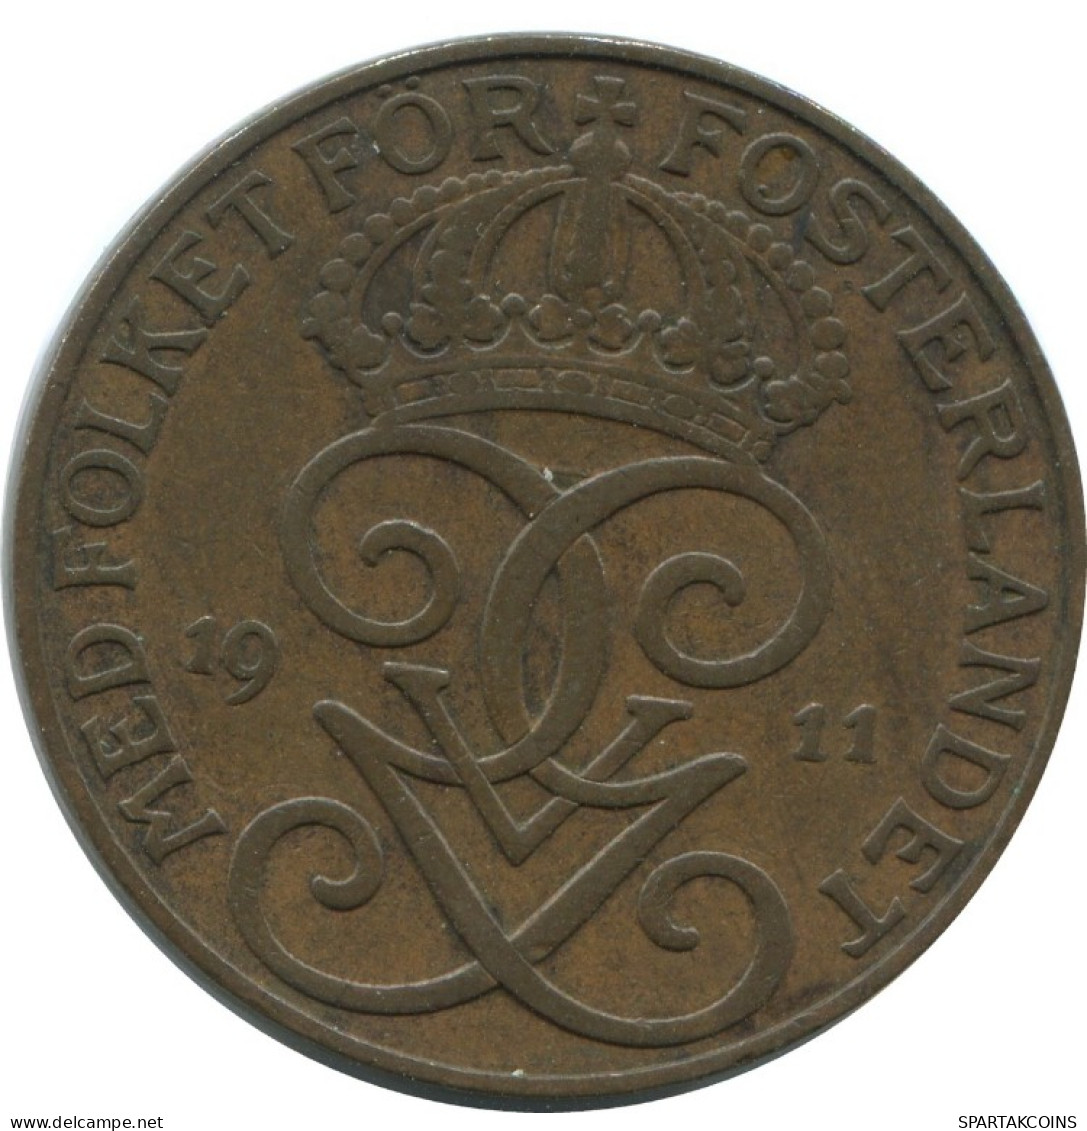 5 ORE 1911 SWEDEN Coin #AC451.2.U.A - Sweden